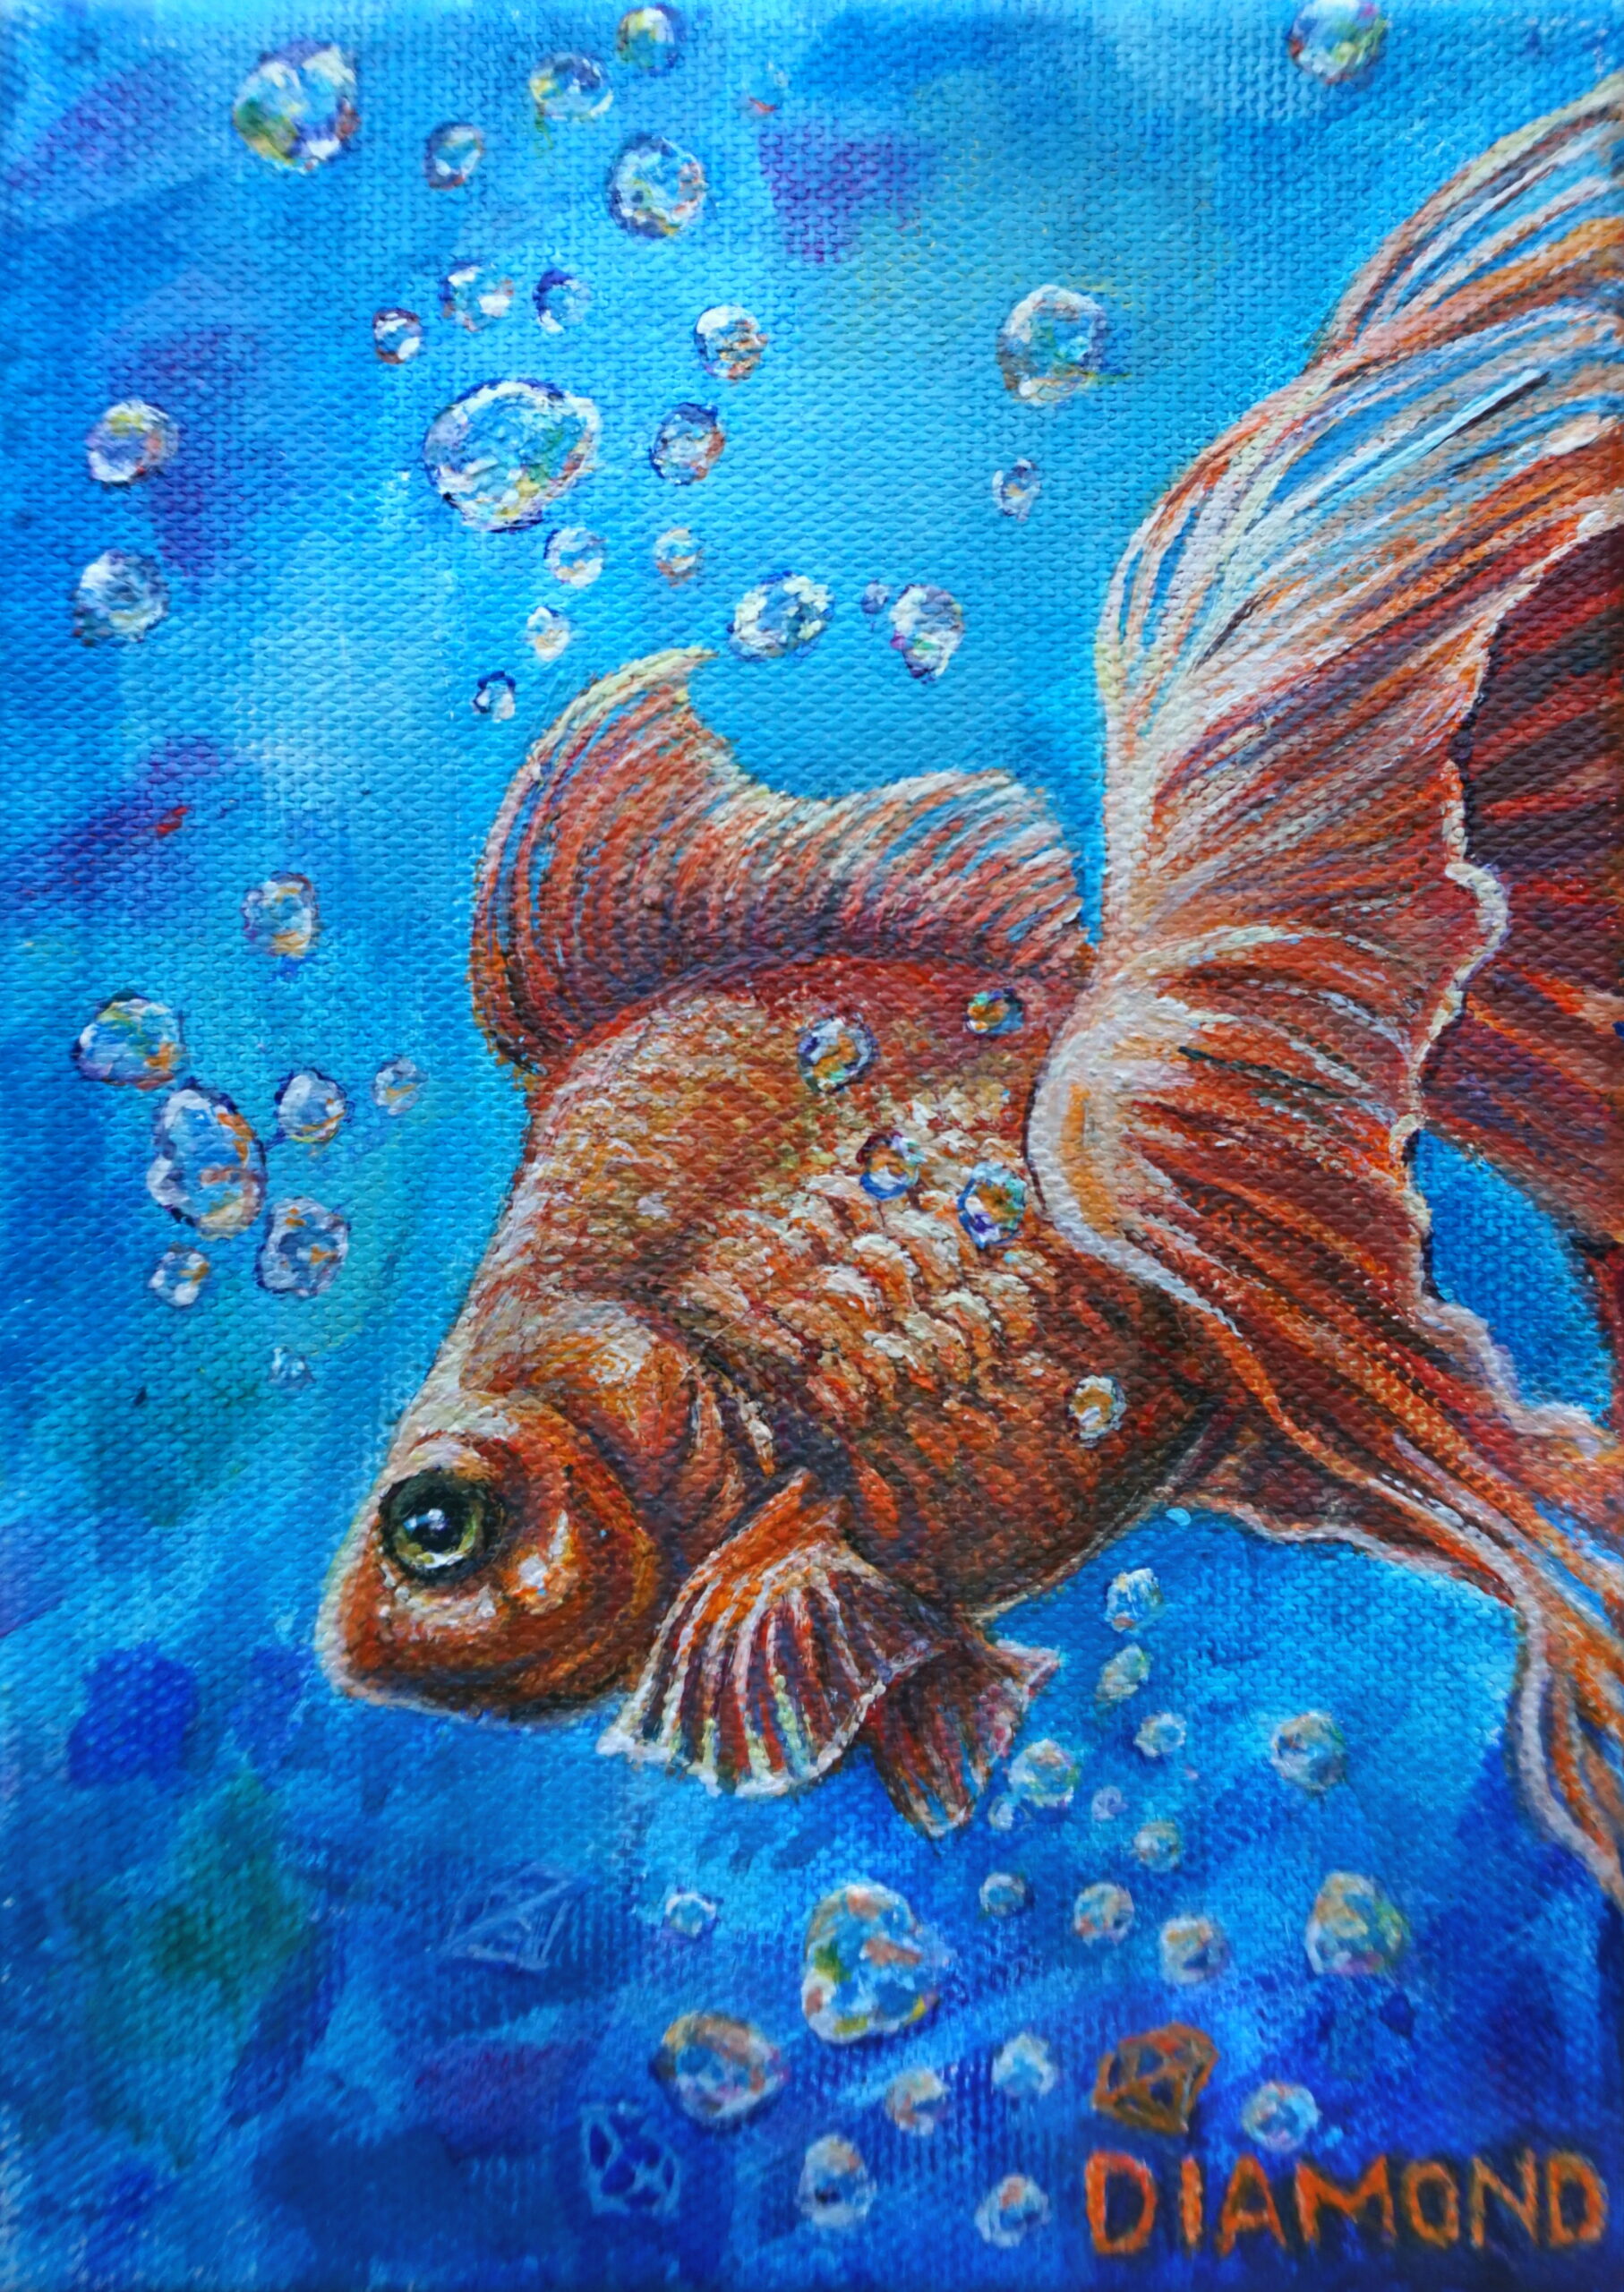 The Debonair Goldfish